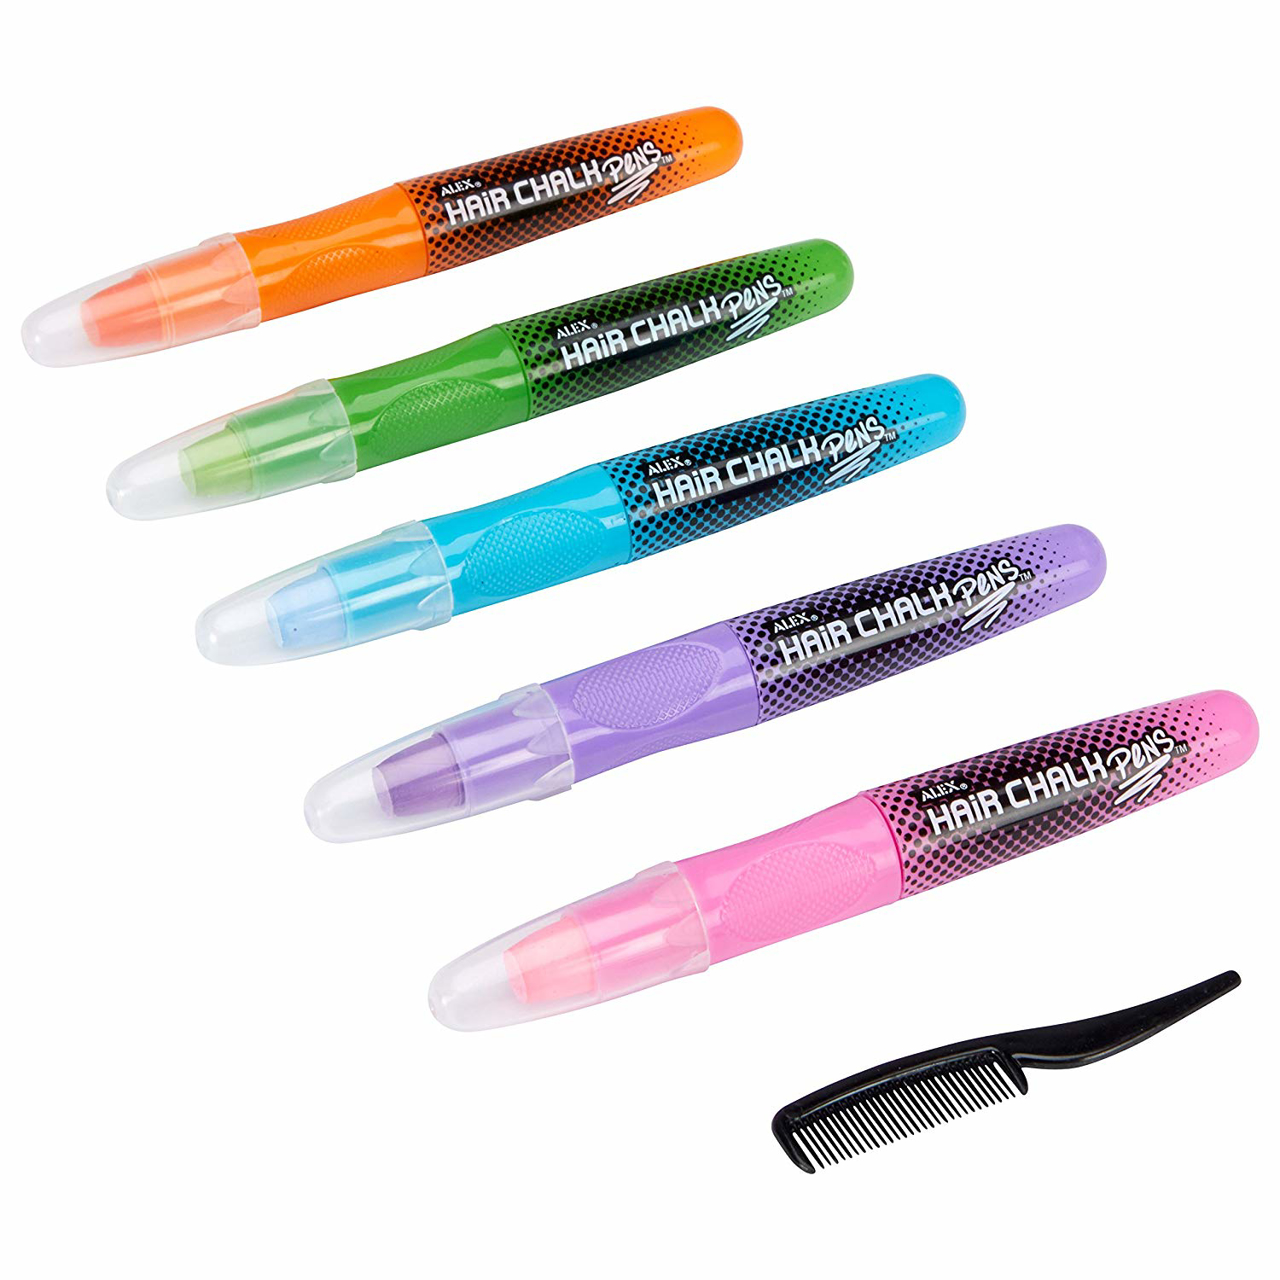 Picture of Alex Spa Hair Chalk Pens (5pc)